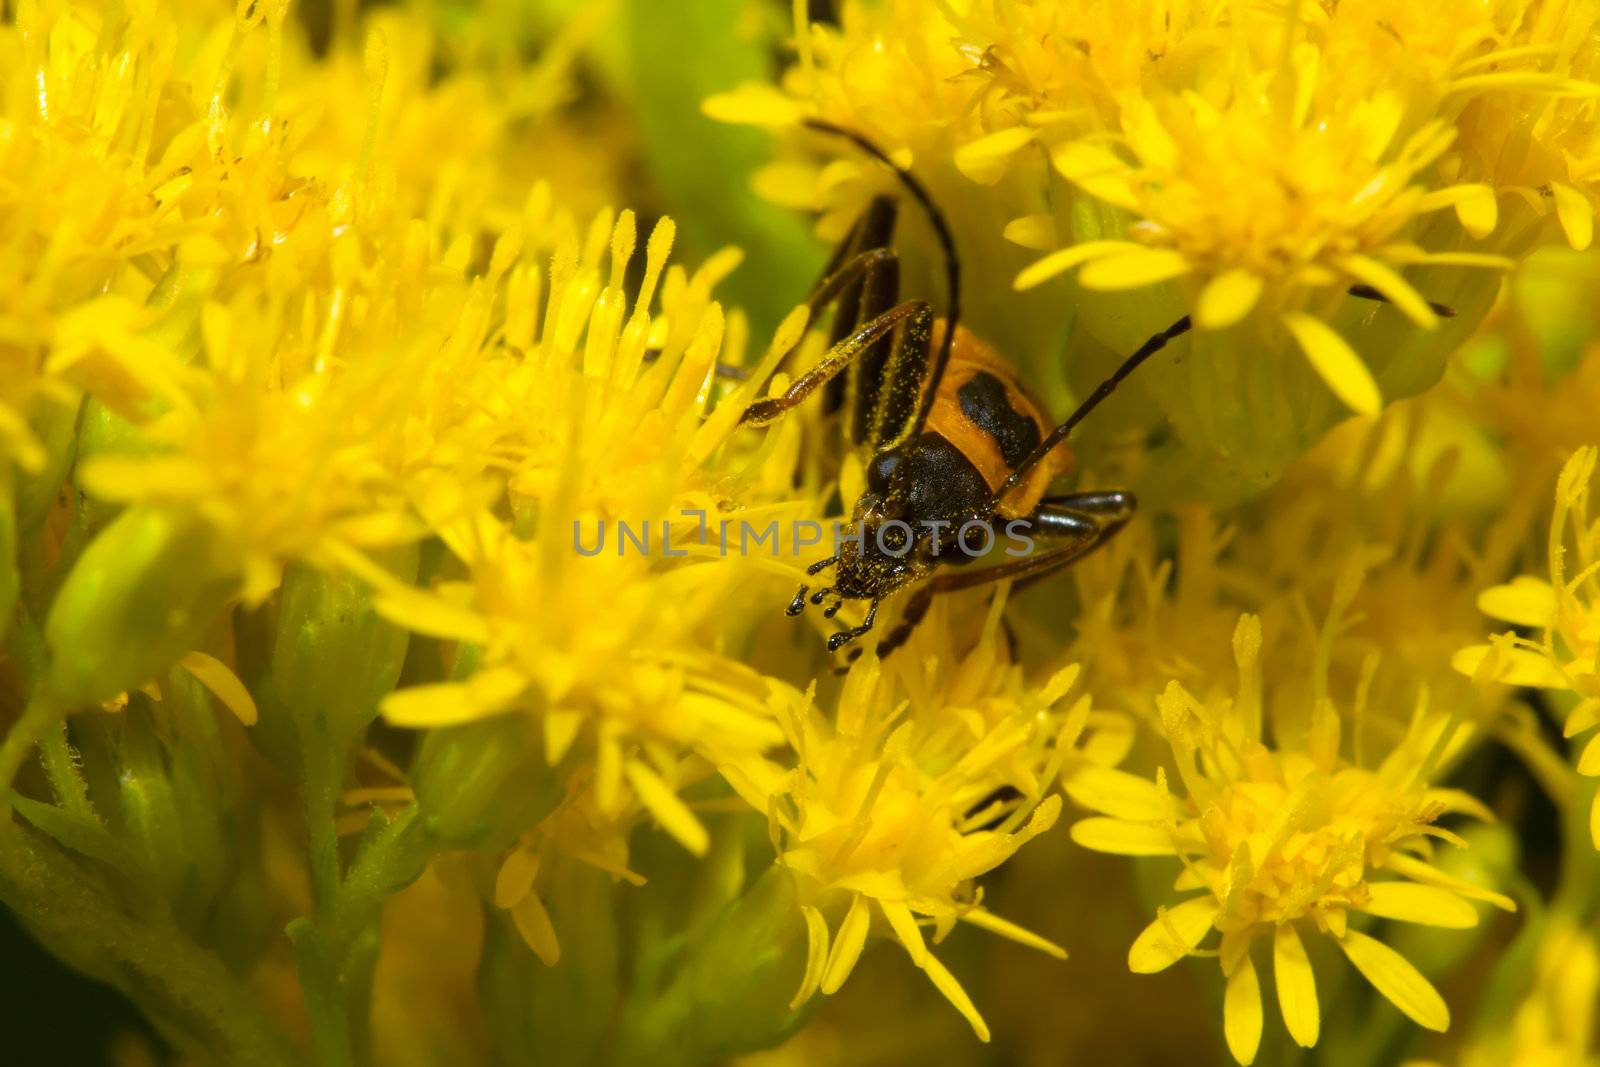 Lightning Bug crawling on a yellow flower.